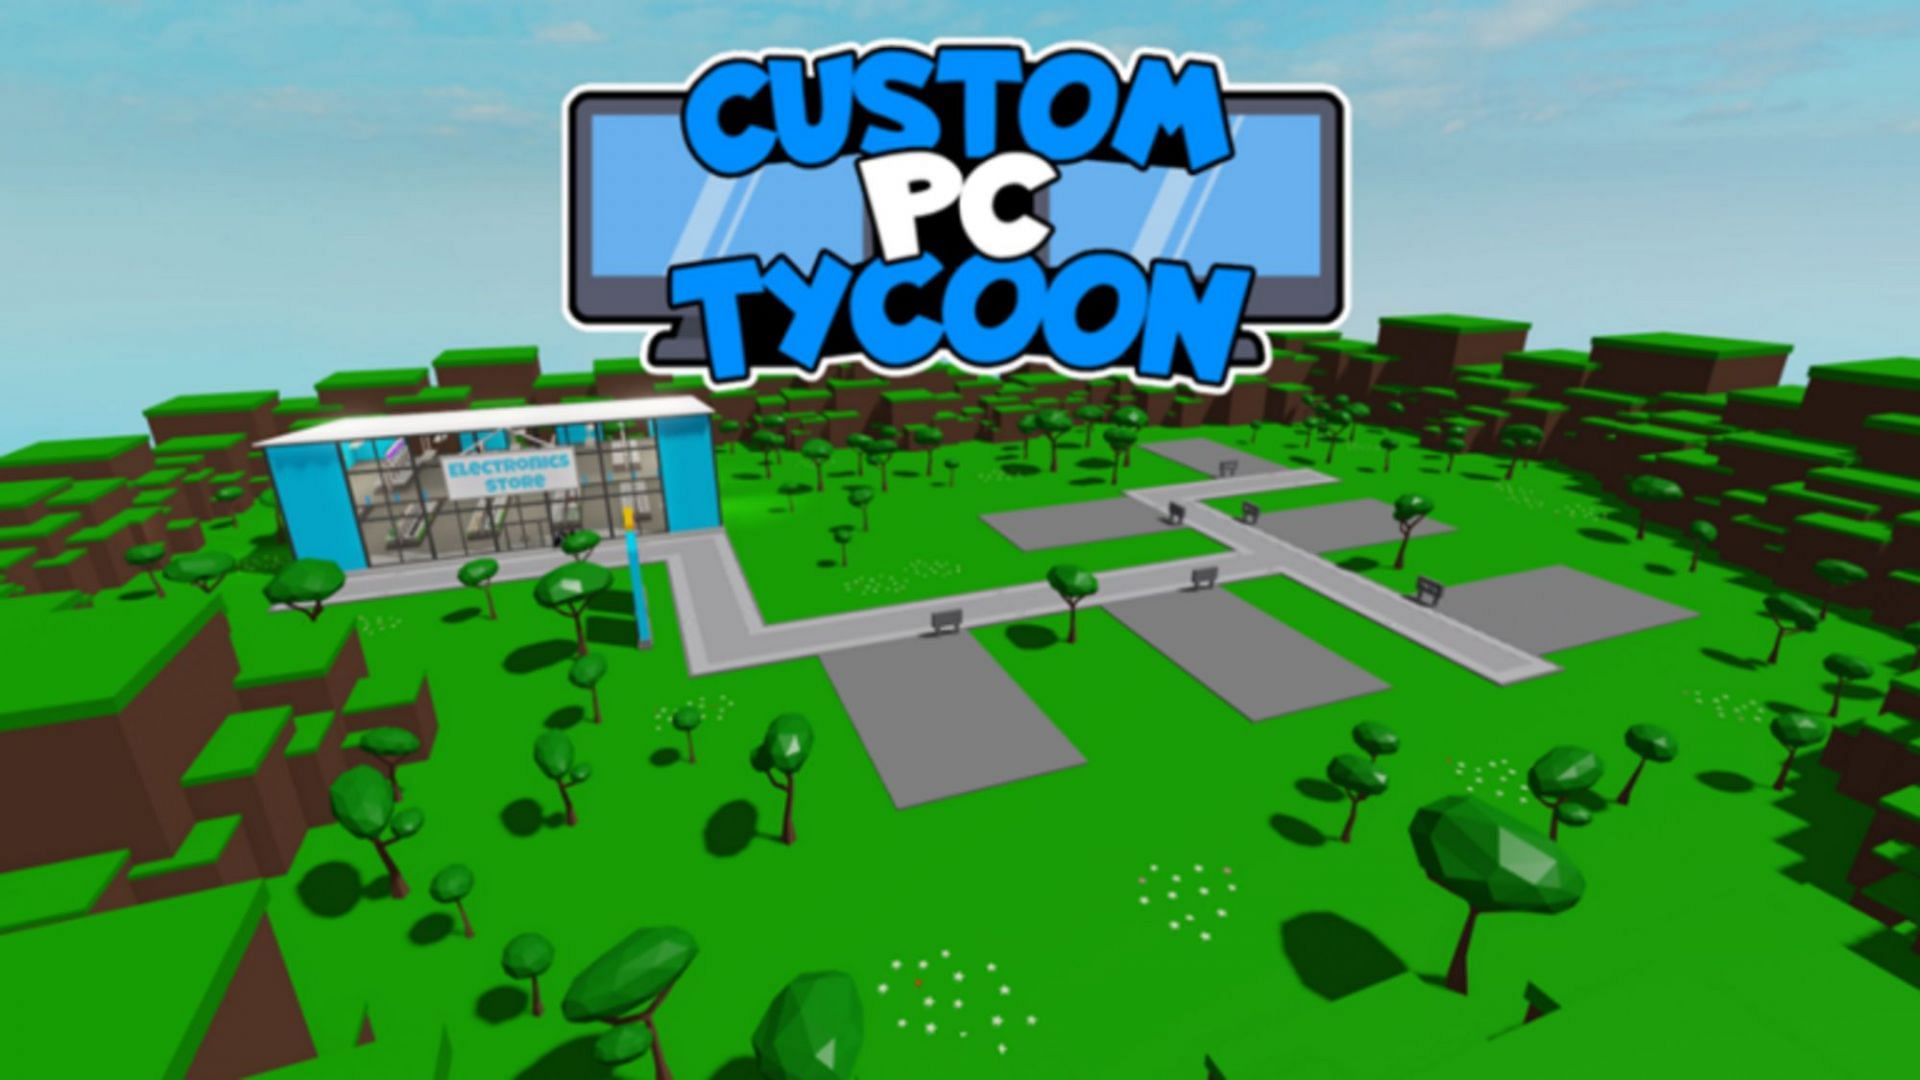 Roblox Custom PC Tycoon codes (June 2022) Free rewards